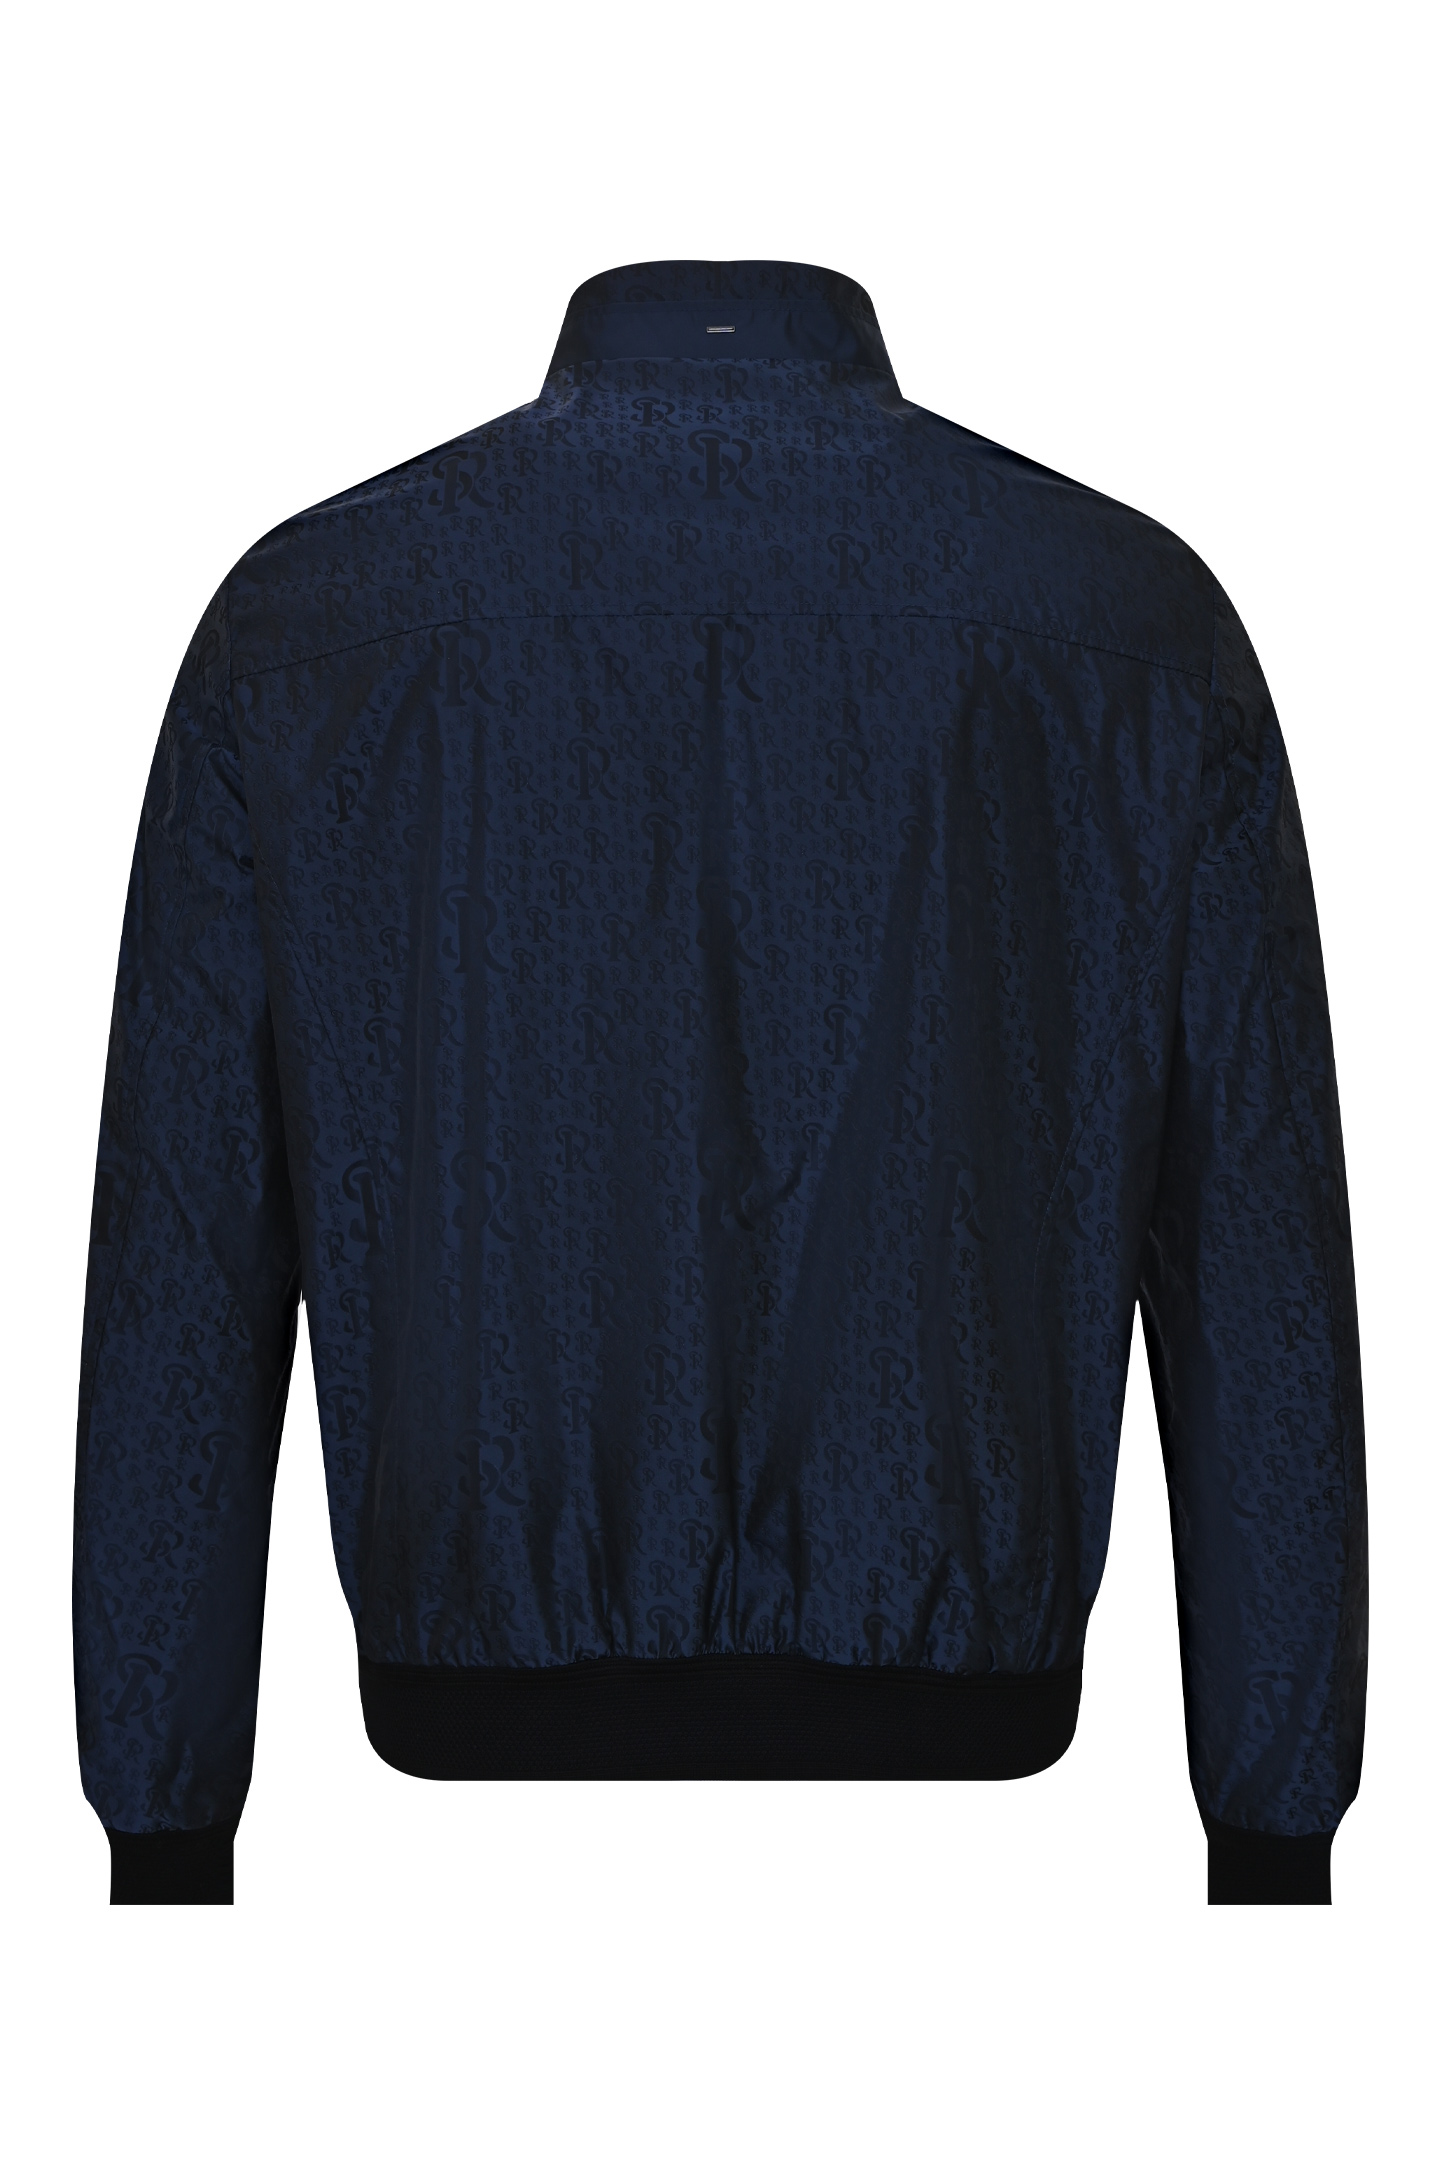 Куртка STEFANO RICCI MDJ2100070 PA001L, цвет: Синий, Мужской